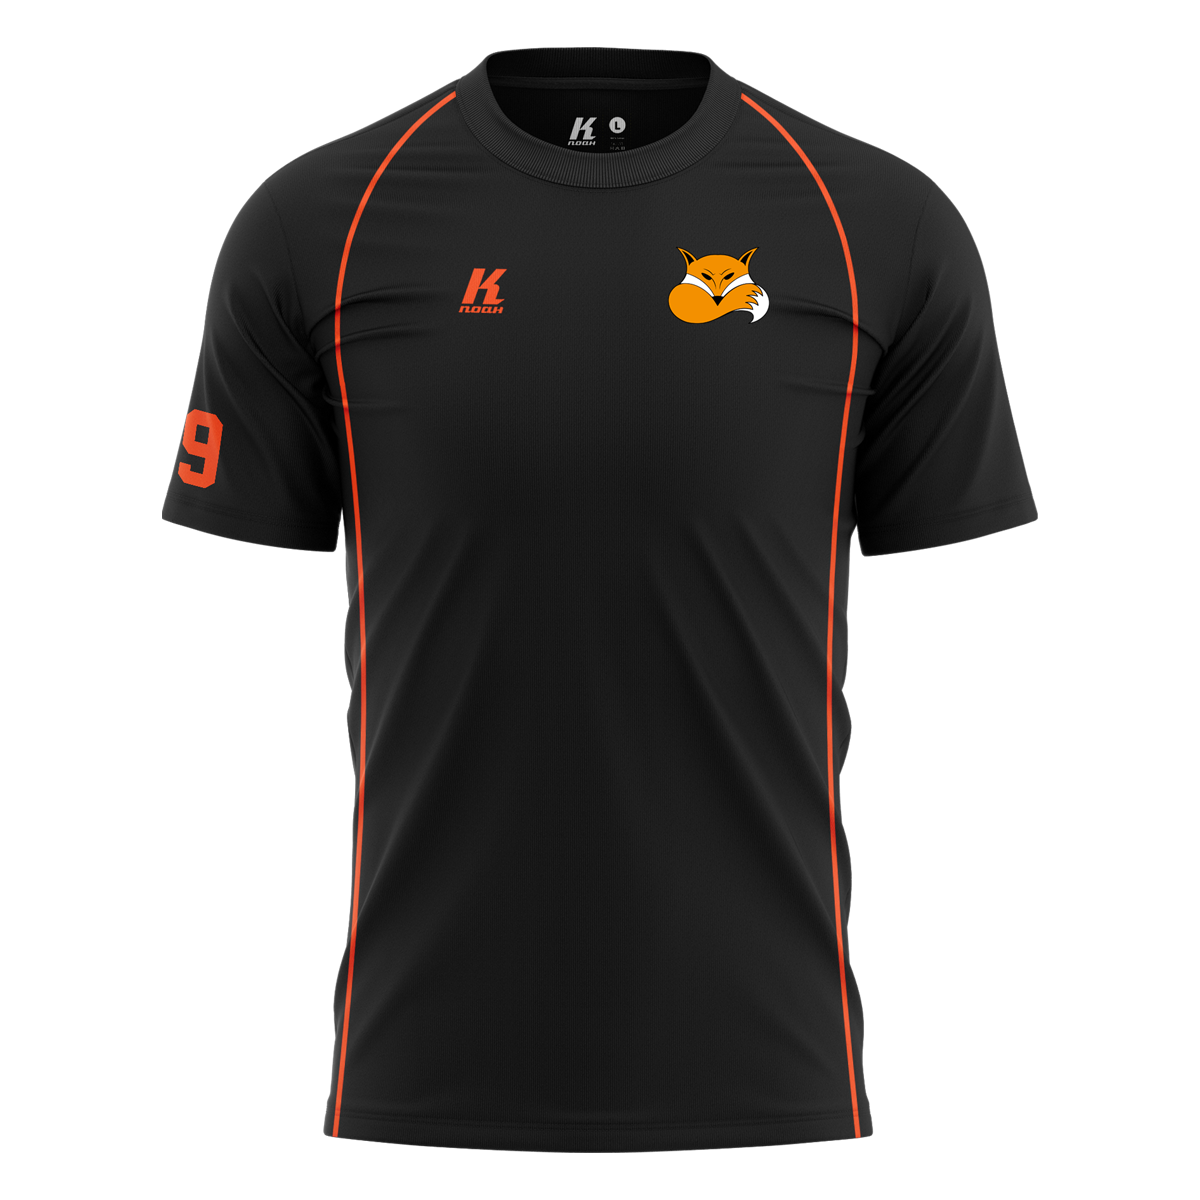 Foxes K.Tech-Fiber T-Shirt with Playernumber/Initials